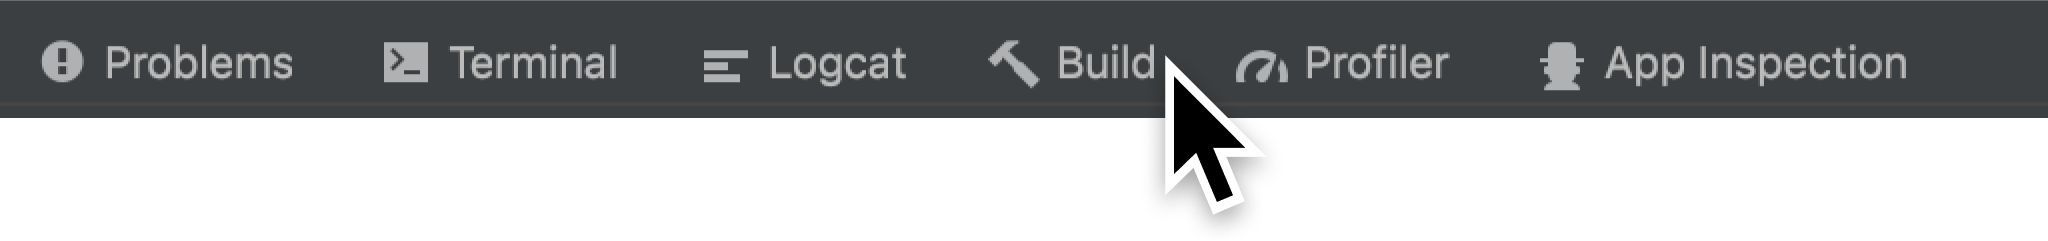 Android Studio 底部的「Build」分頁